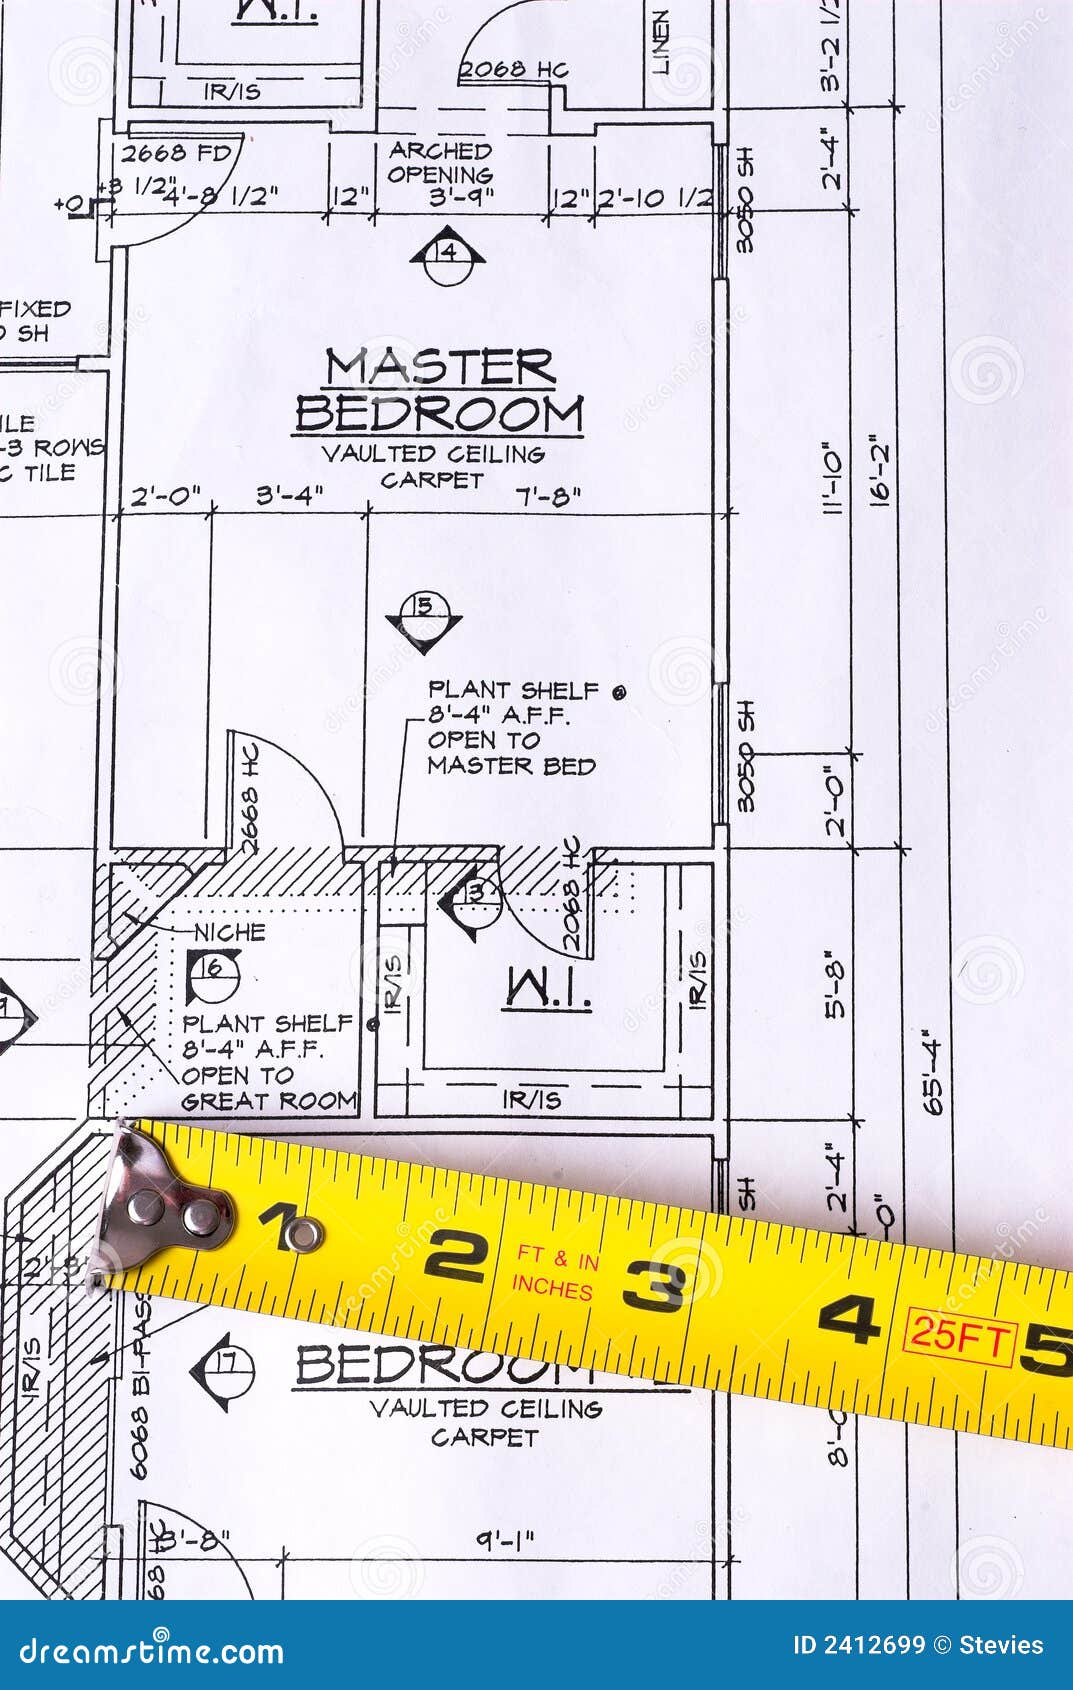 Tape Measure on Blueprints stock image Image of measure 